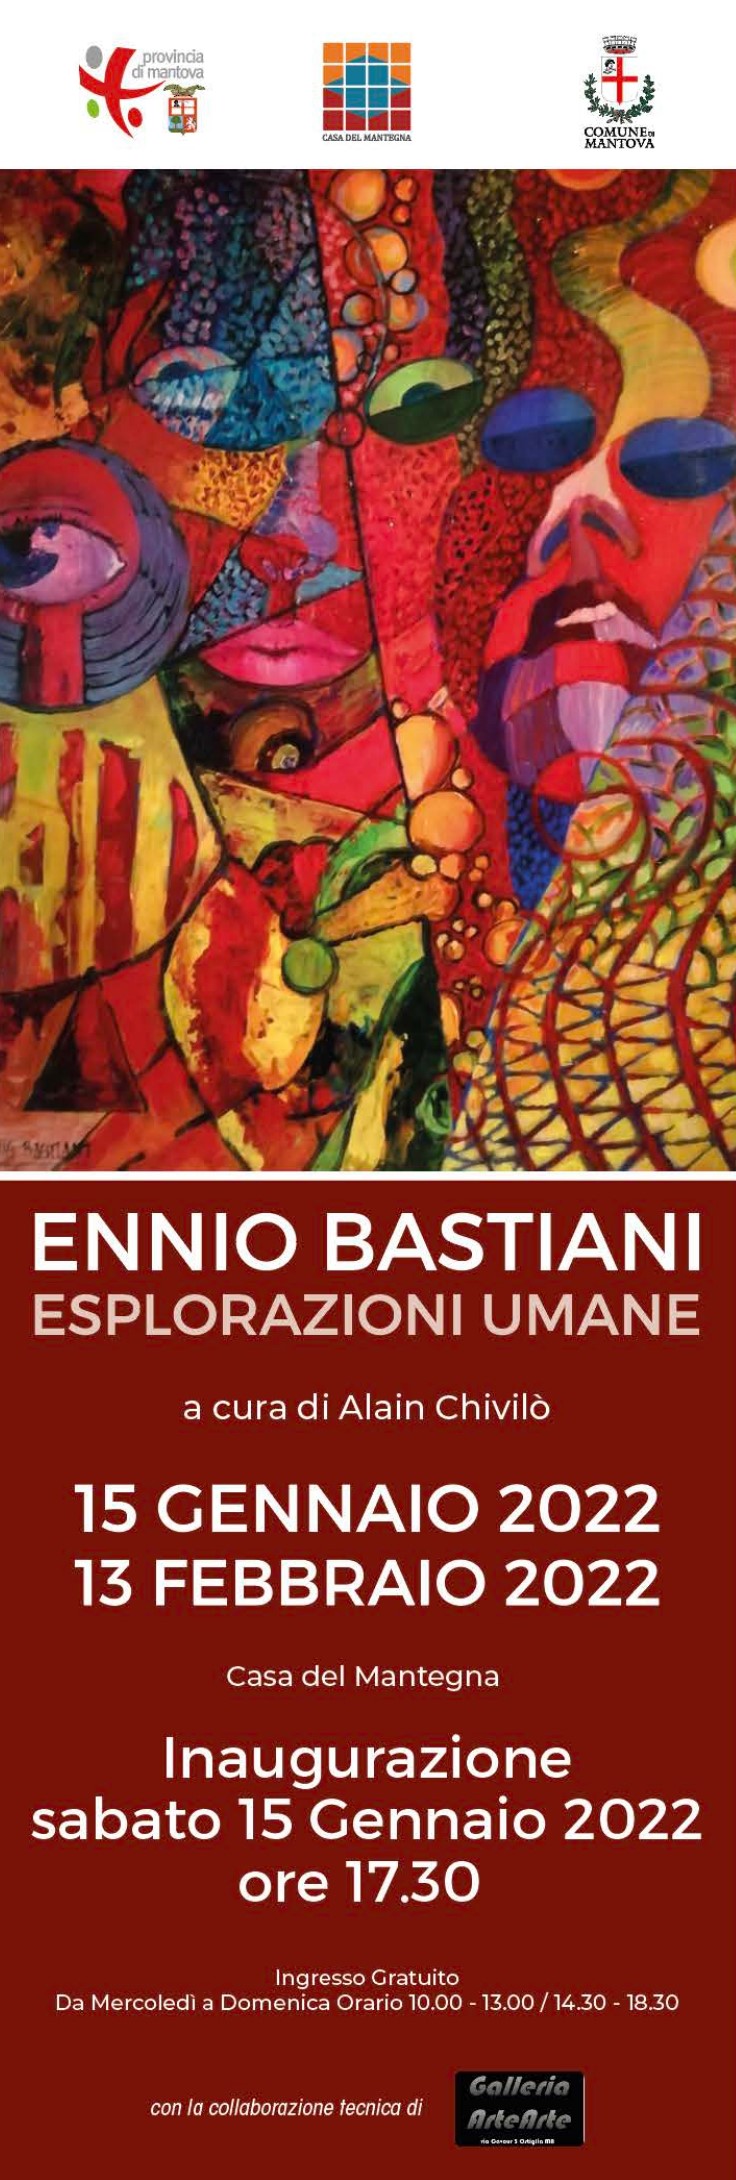 Banner esterno, Ennio Bastiani